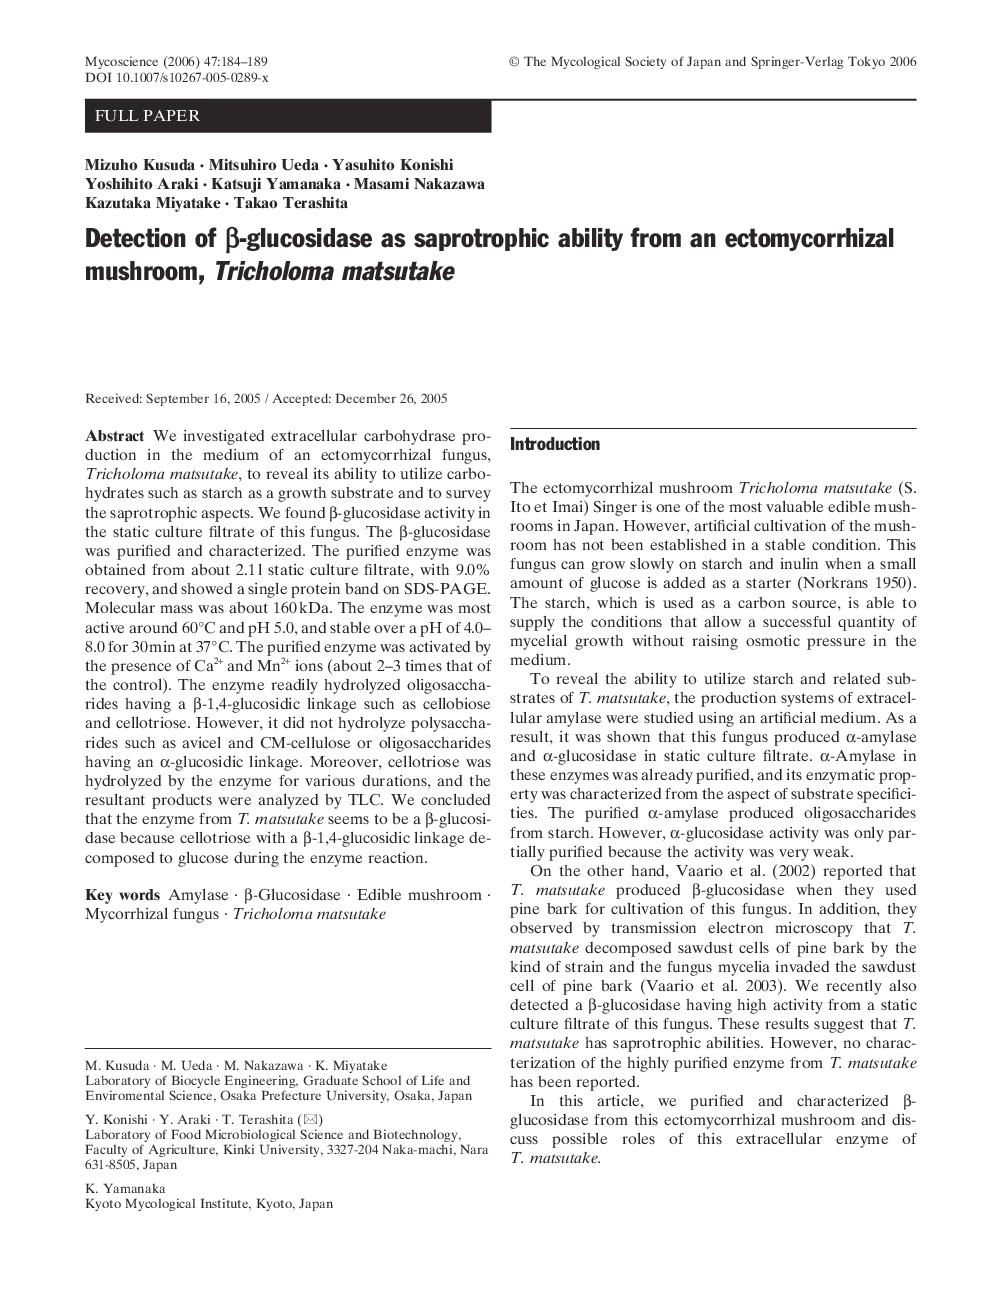 Detection of β-glucosidase as saprotrophic ability from an ectomycorrhizal mushroom, Tricholoma matsutake